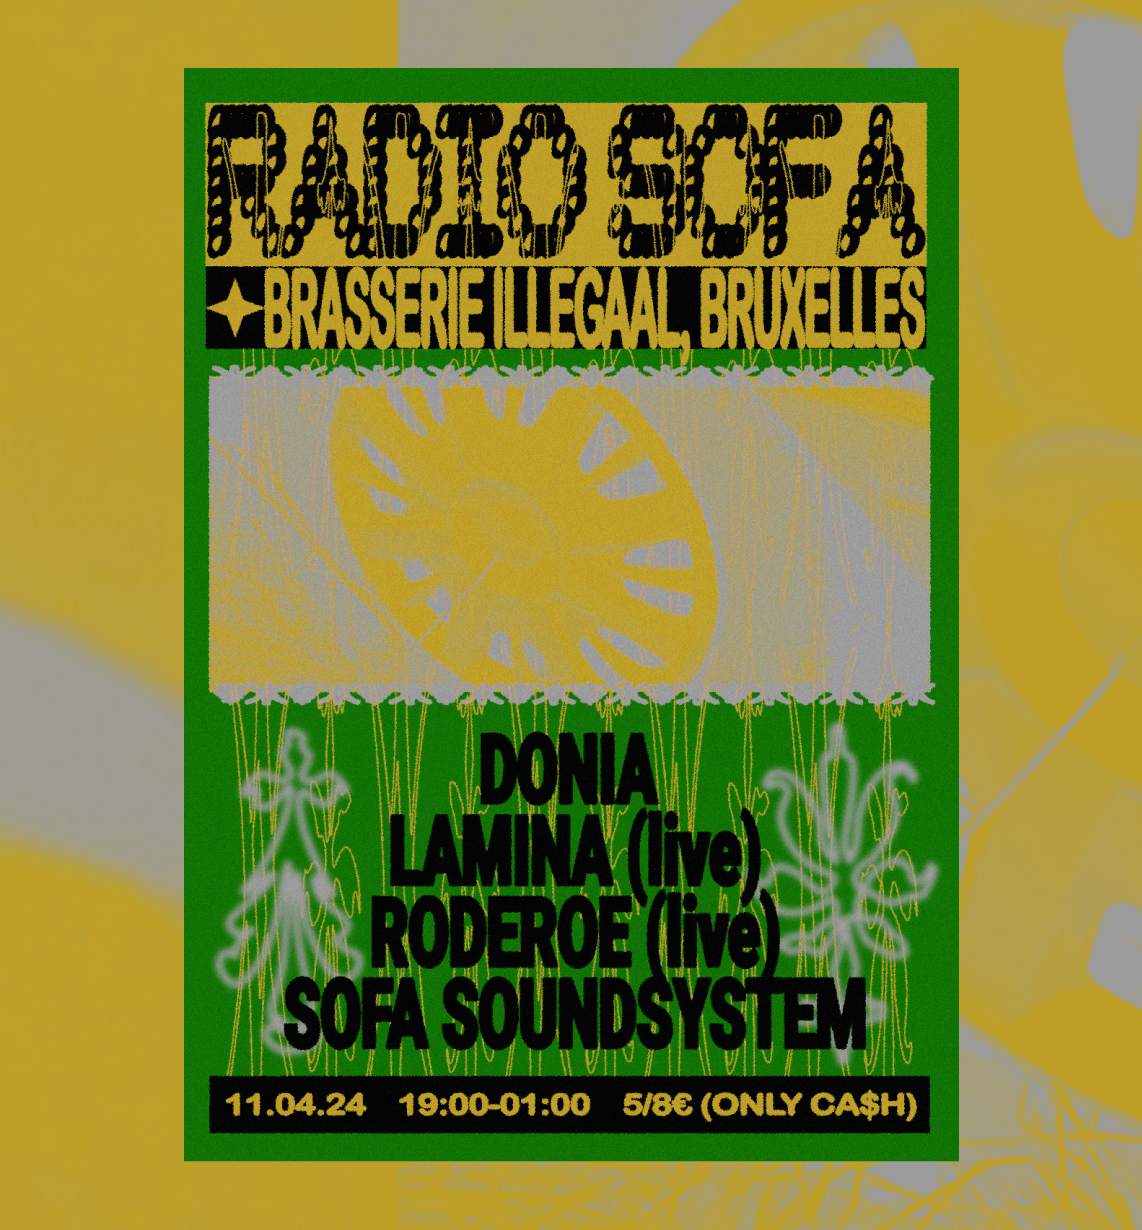 Radio Sofa x Brasserie Illegaal: DONIA, LAMINA (live), Roderoe (live), SOFA SOUNDSYSTEM - Página trasera